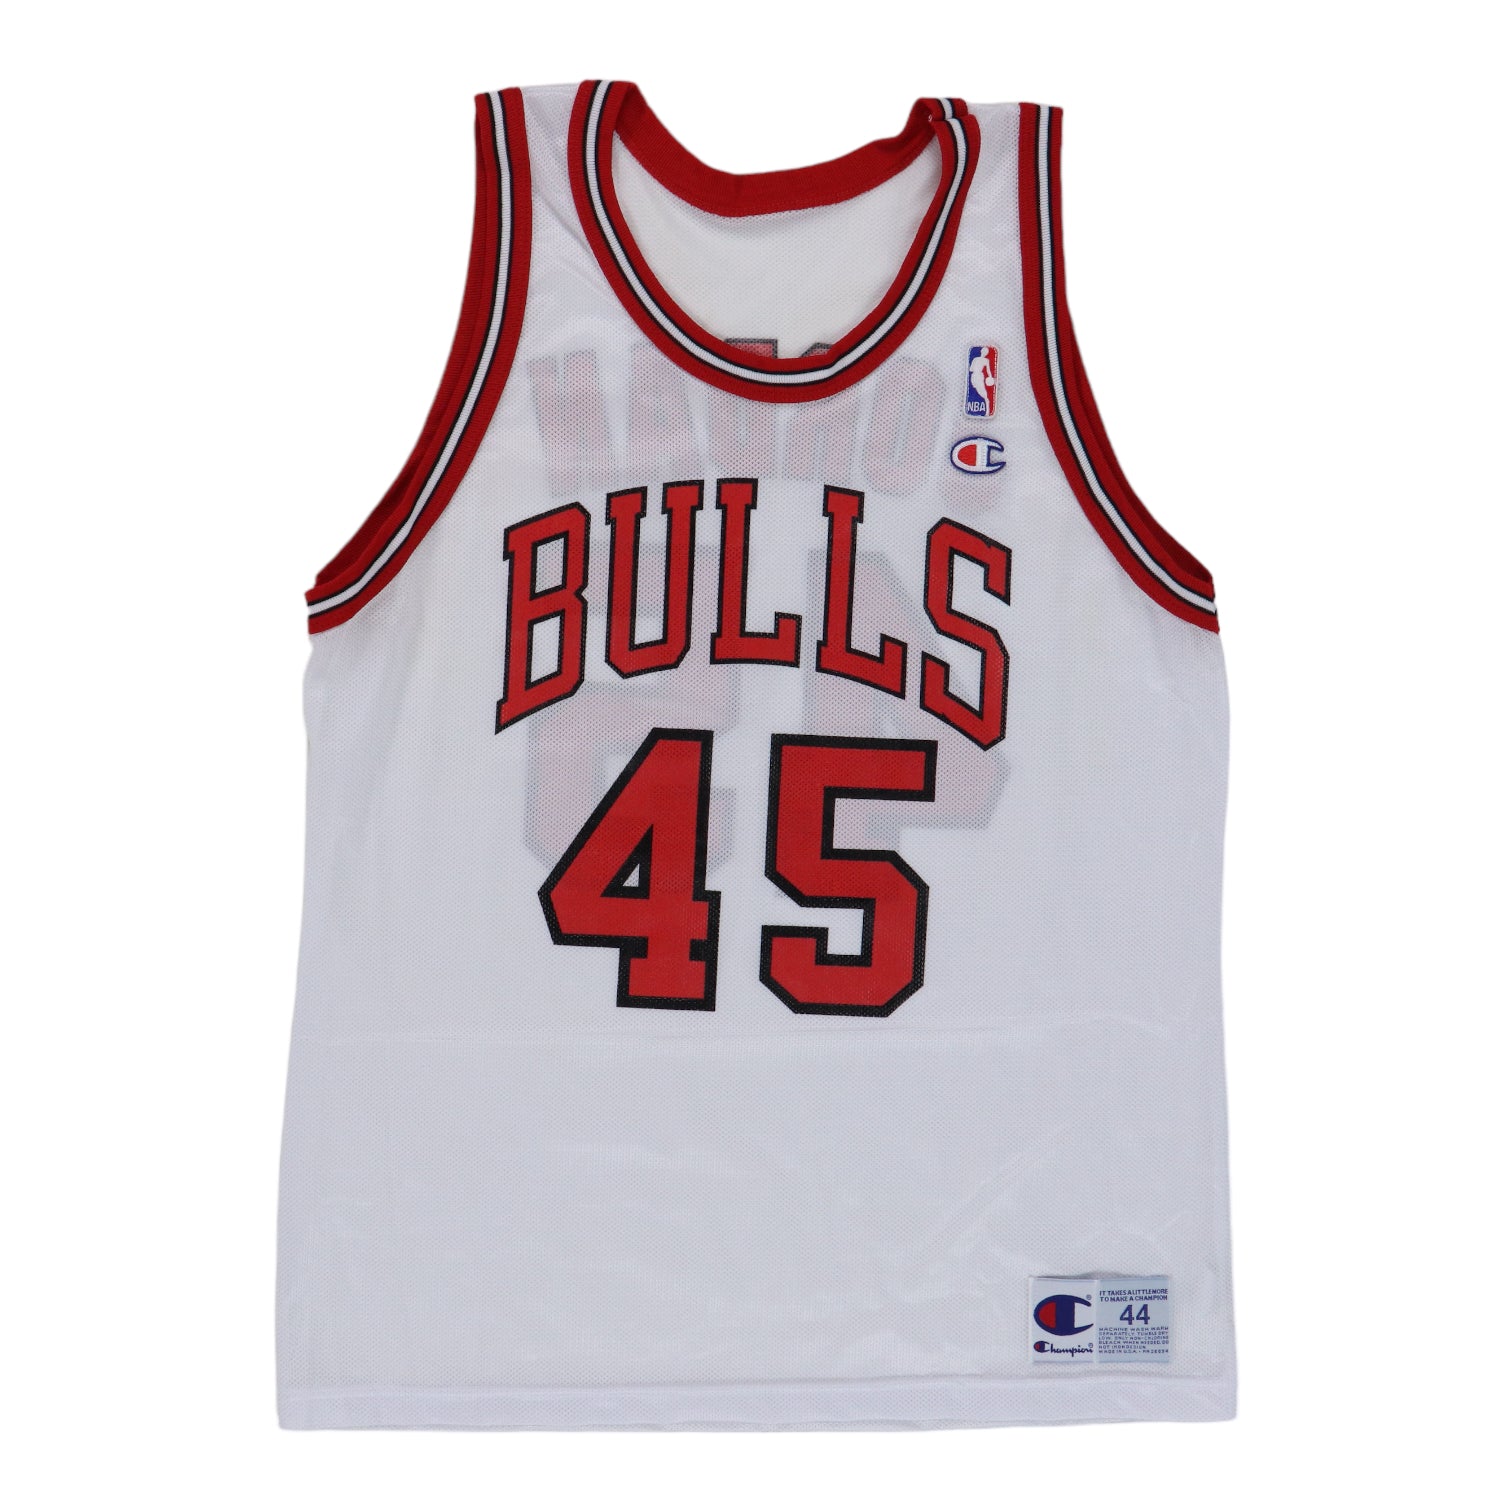 Michael Jordan Retro Throwback Basketball Shirt Basketball Jersey